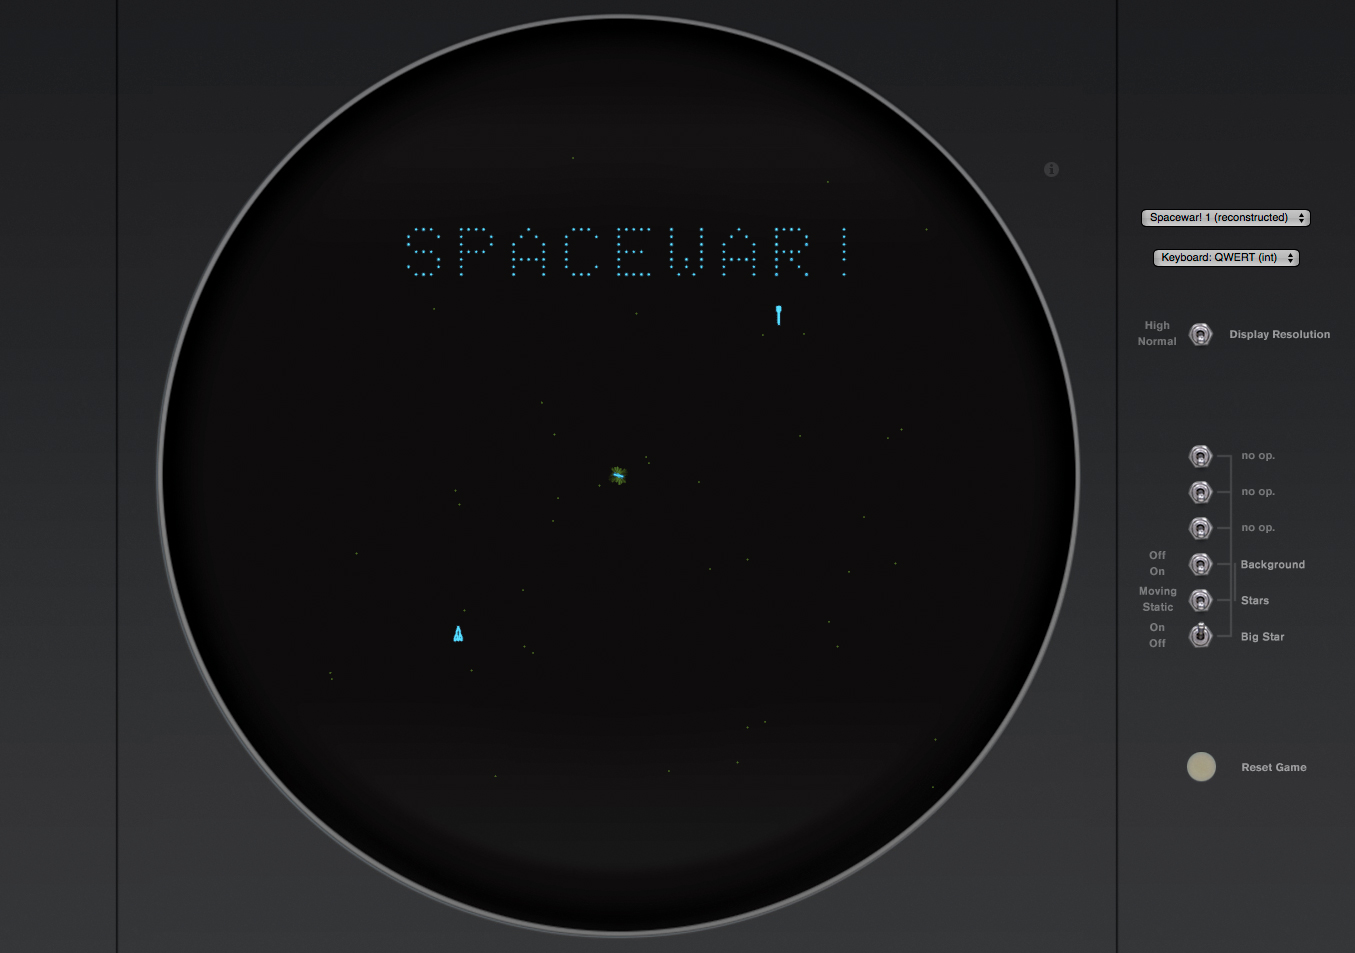 Spacewar 1 (recontructed) in emulation